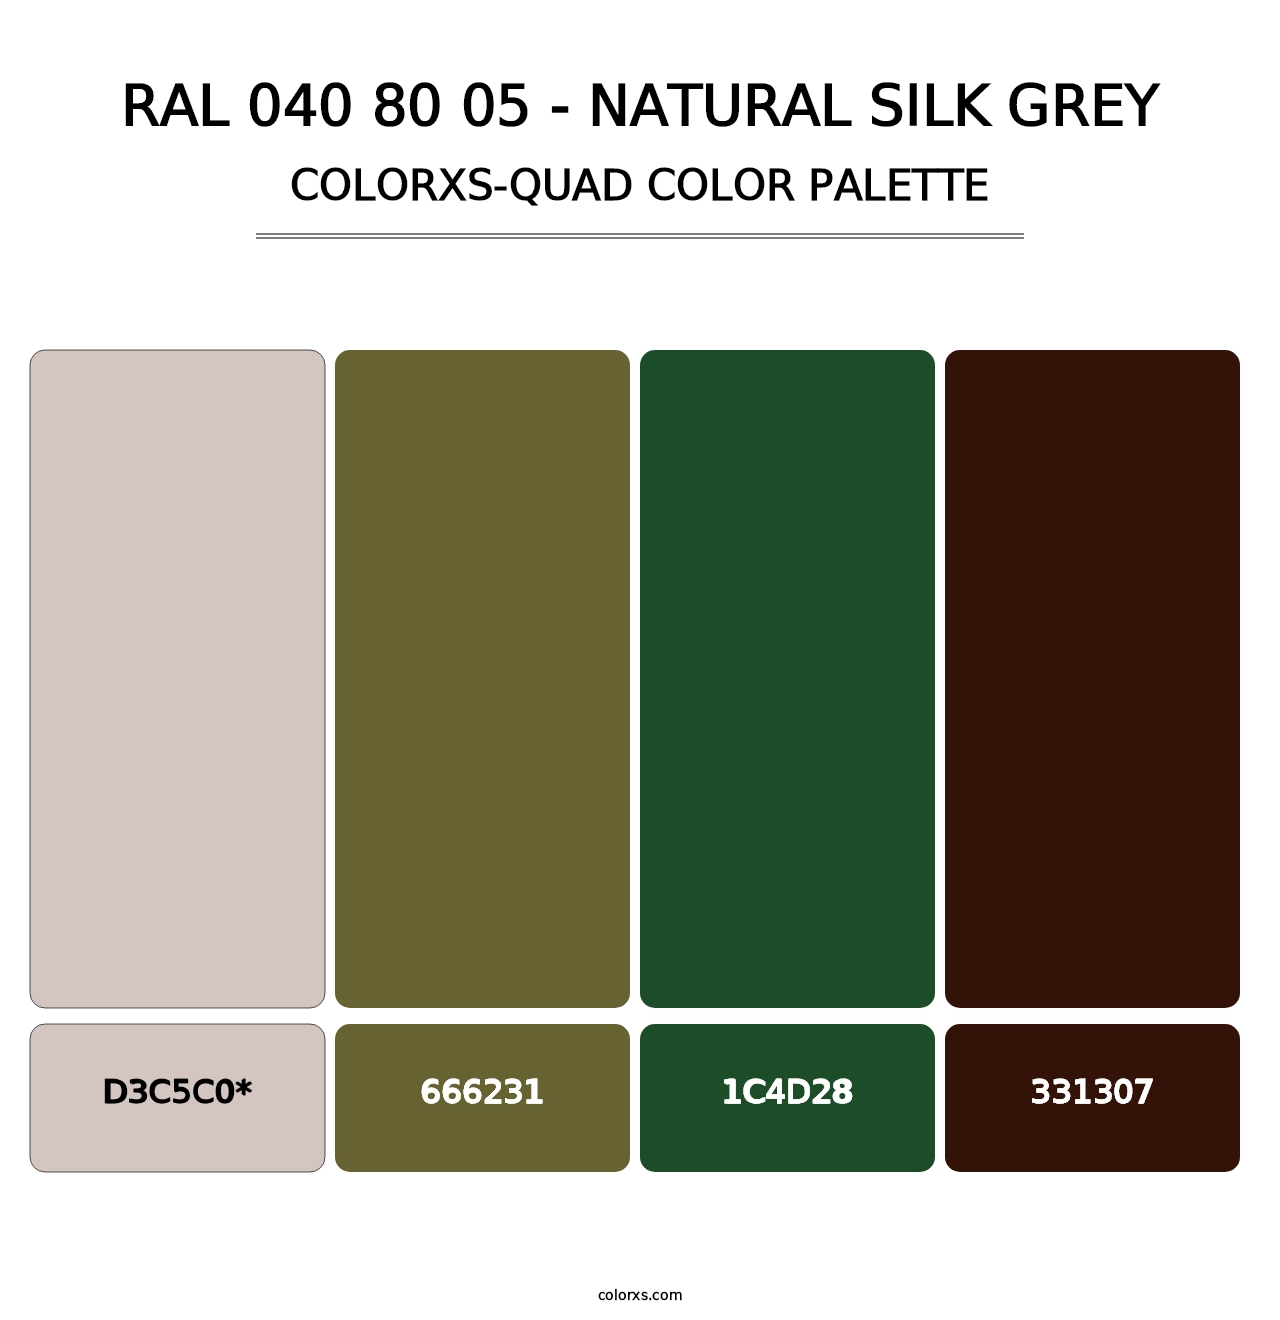 RAL 040 80 05 - Natural Silk Grey - Colorxs Quad Palette